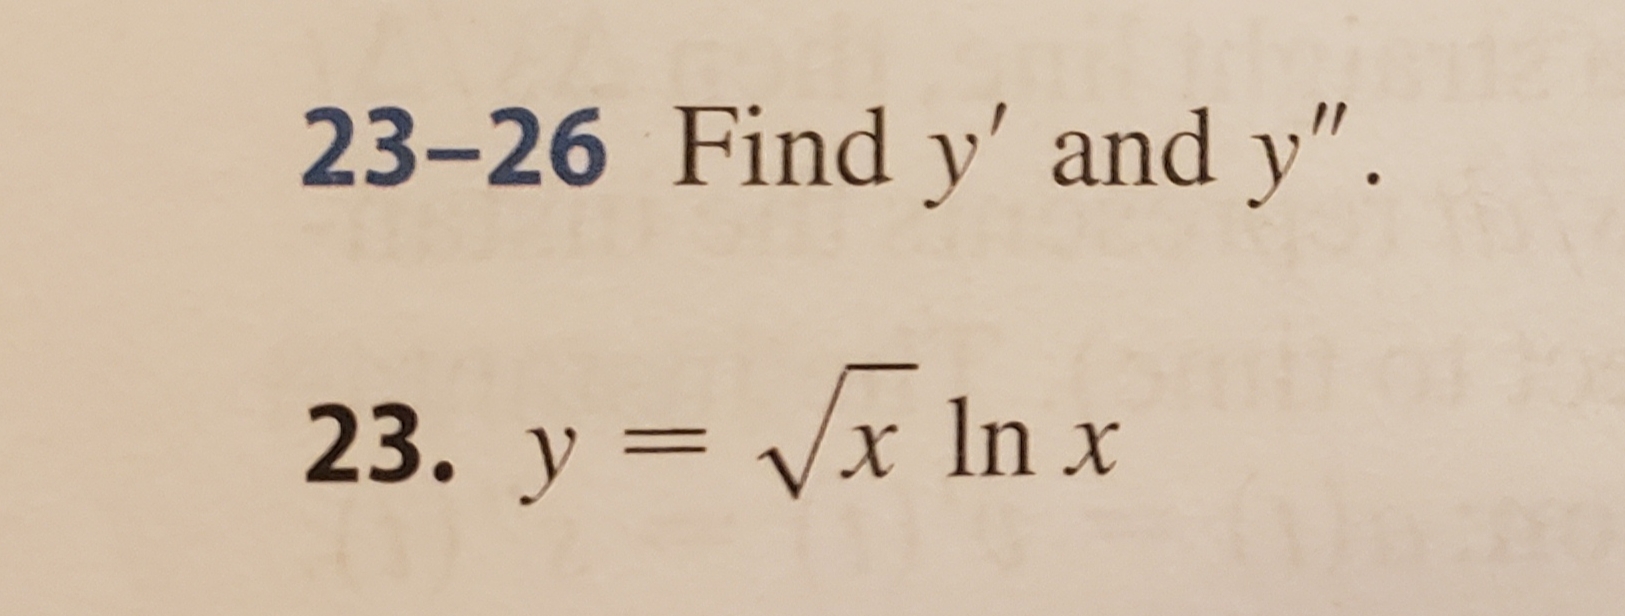 23-26 Find y' and y".
23. y x In x
=
